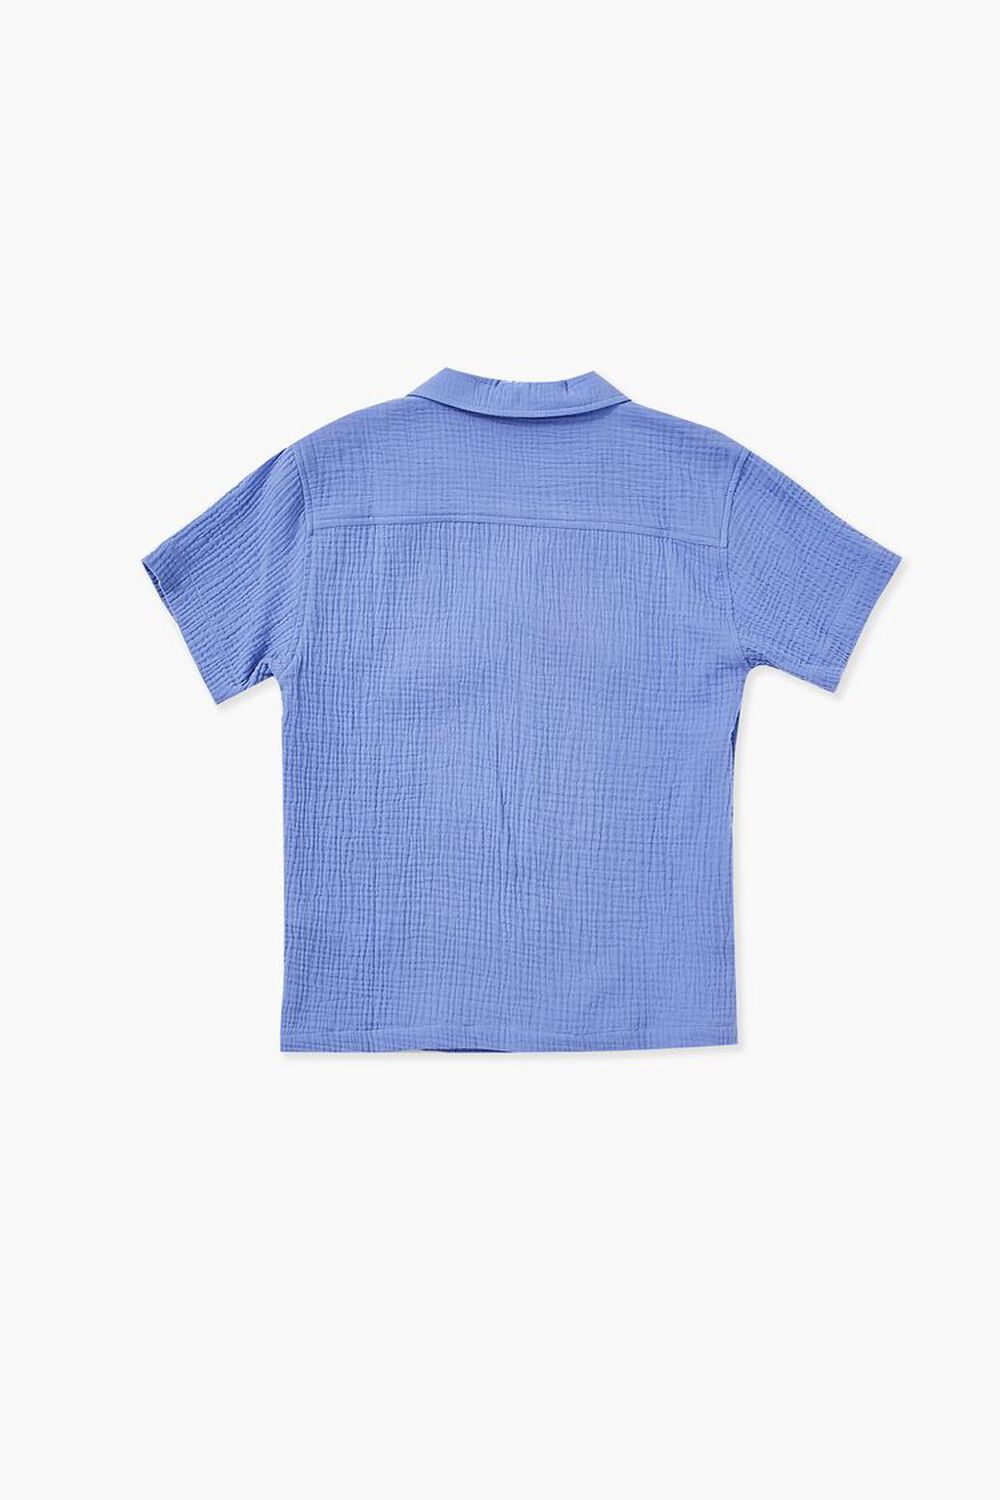 Kids Crinkle Shirt (Girls + Boys), image 2